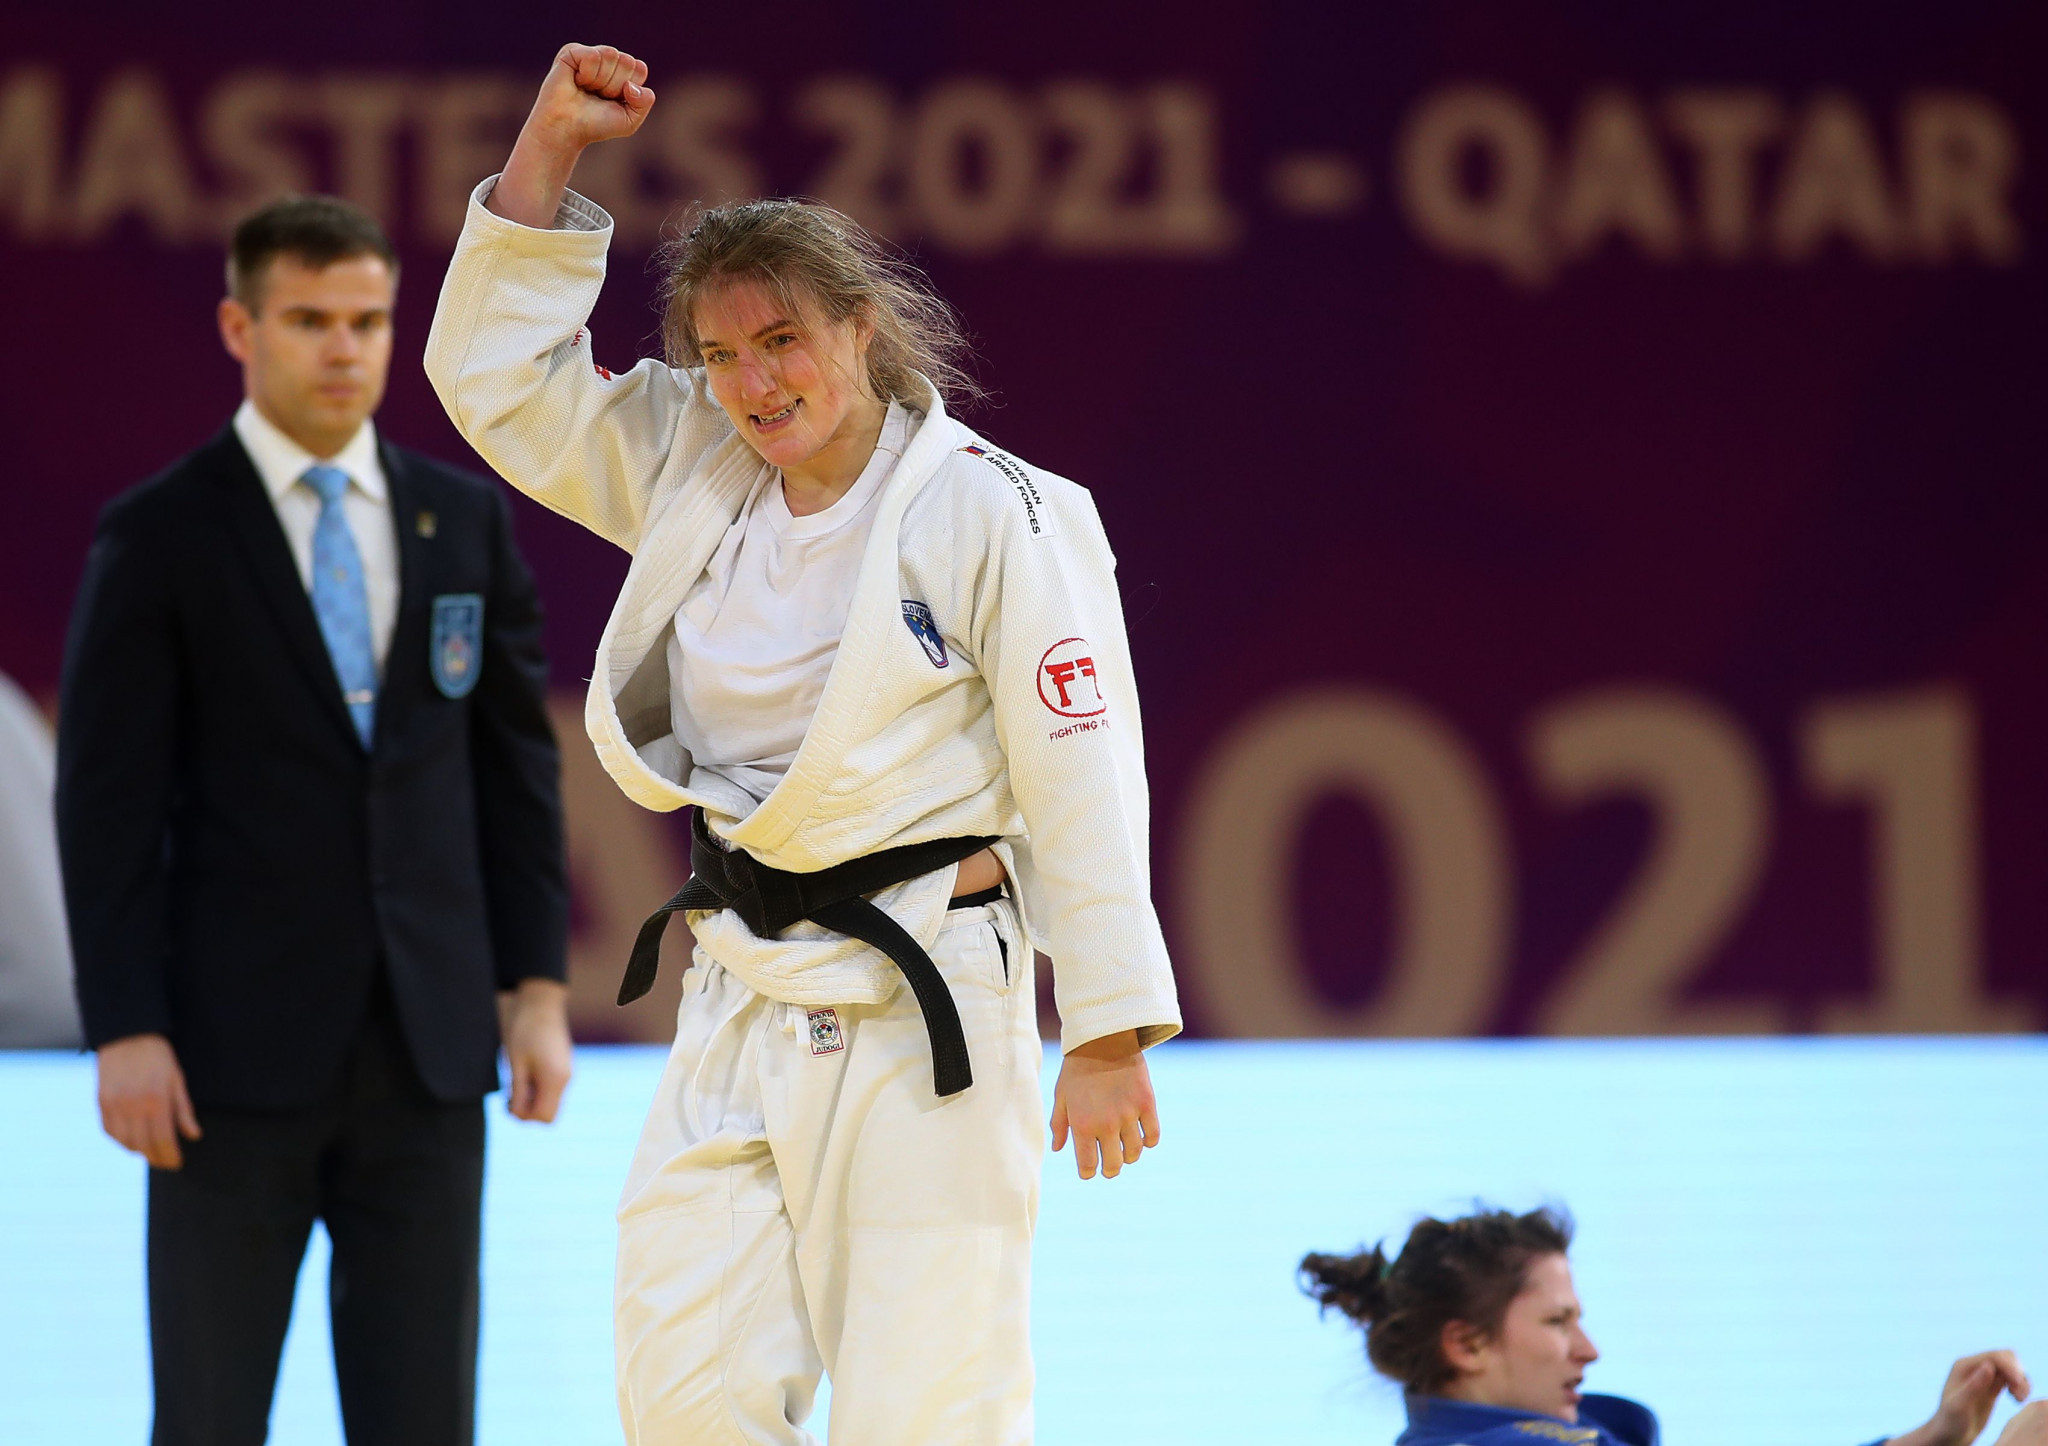 Abu Dhabi ready for last leg of 2021 World Judo Tour